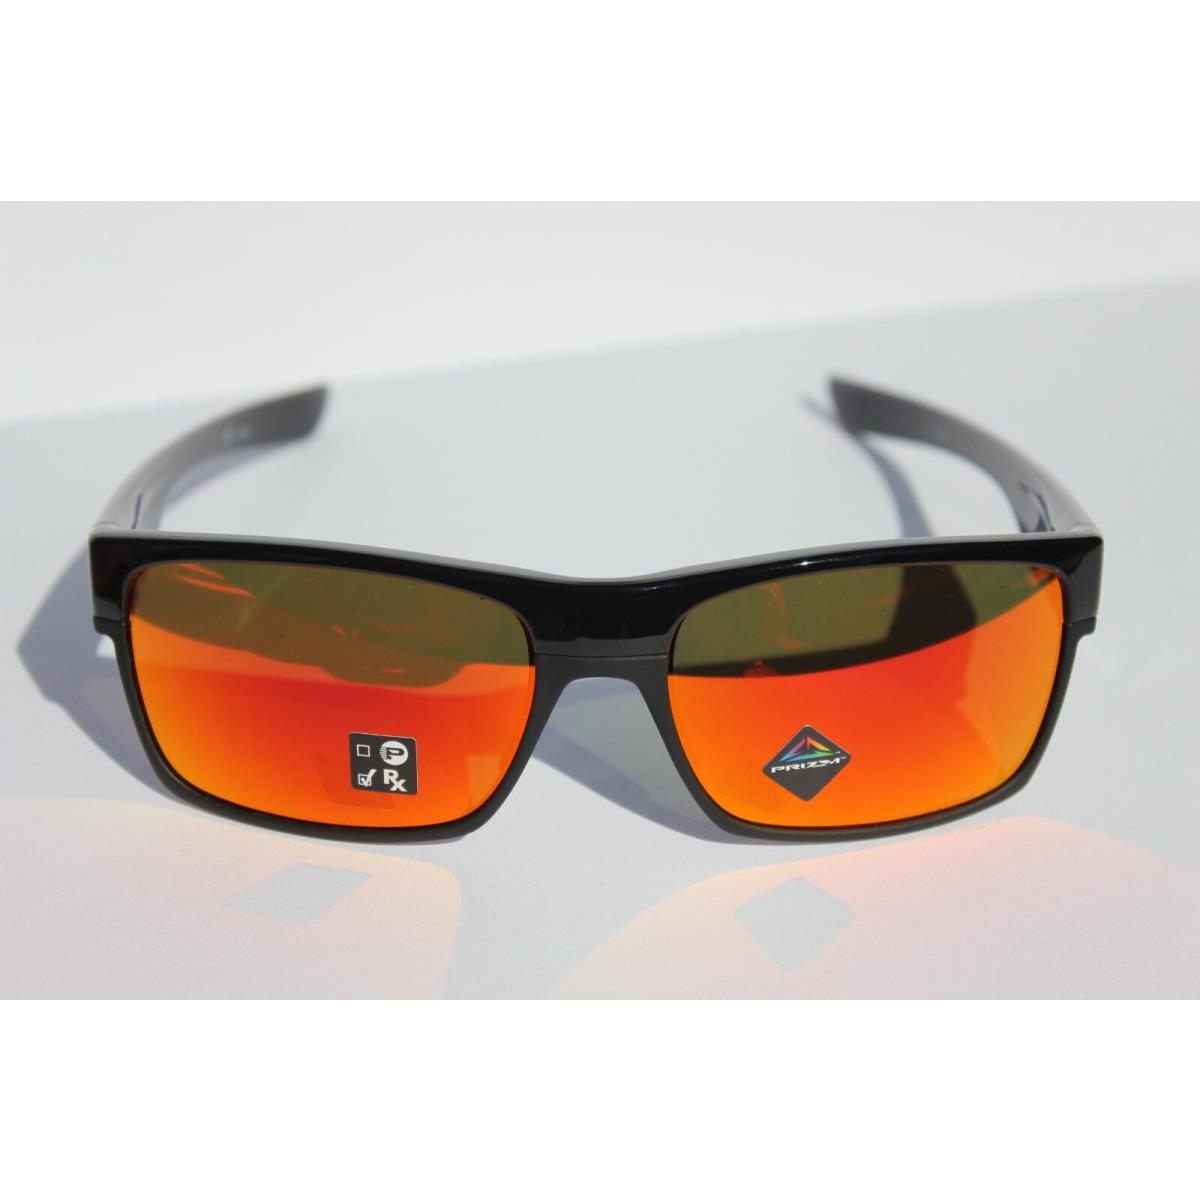 Oakley sunglasses Twoface - Black Frame, Ruby Lens 2